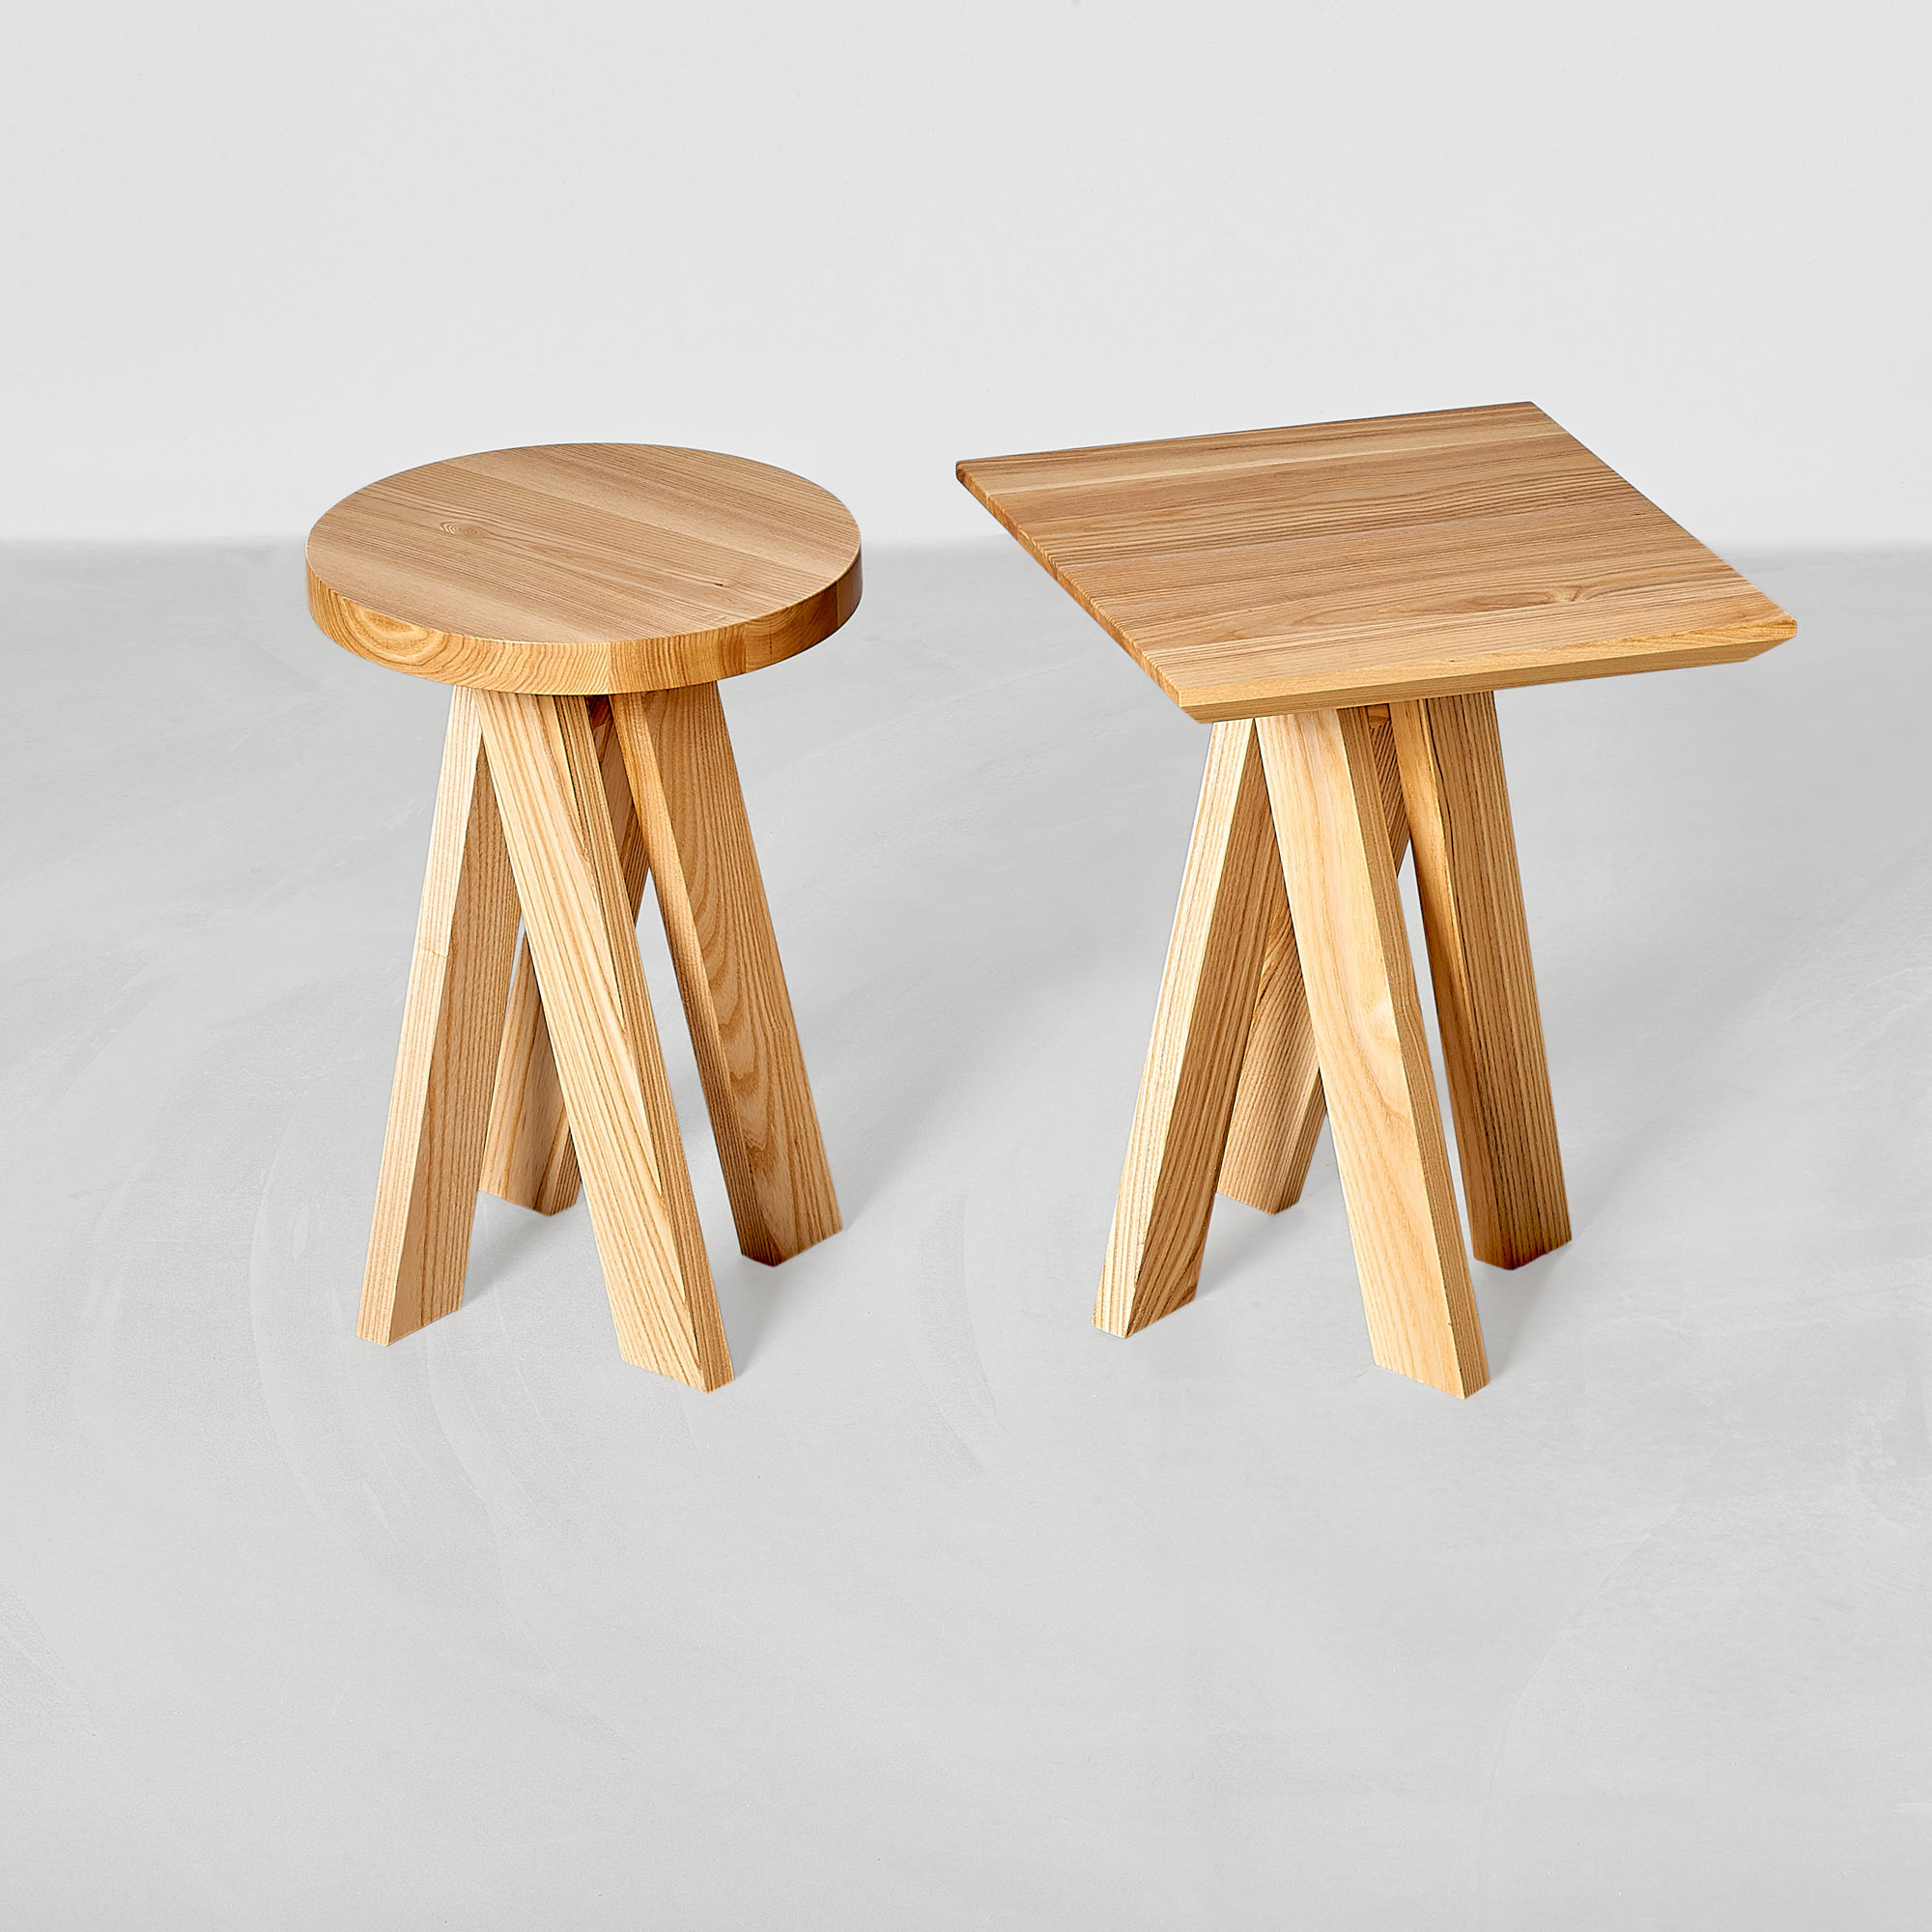 Designer Coffee Table ZIRKEL R Zirkel4728 custom made in solid wood by vitamin design